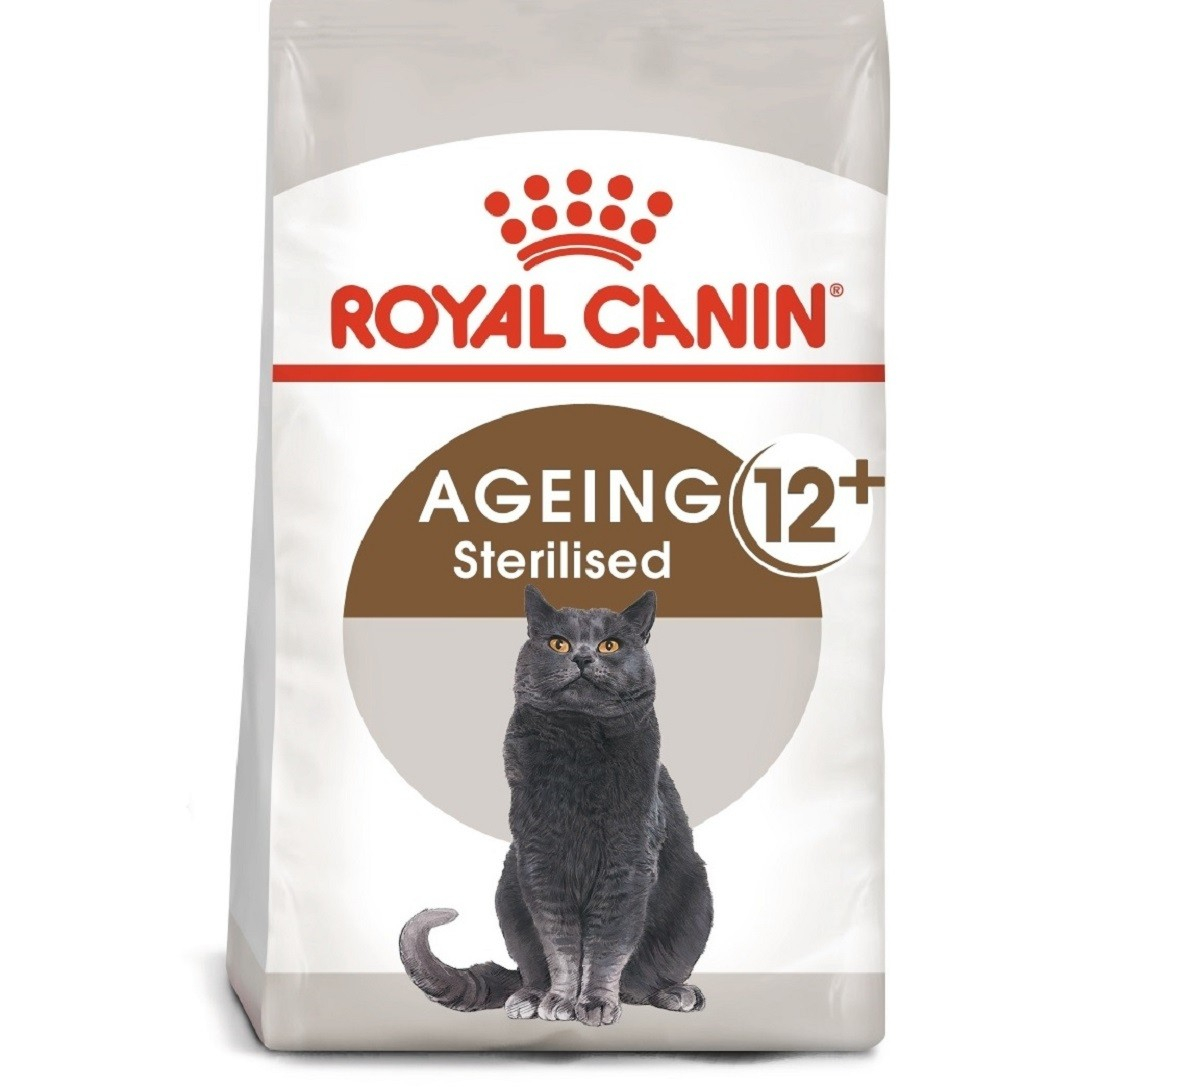 Royal canin ageing для кошек. Роял Канин Стерилайзд. Royal Canin ageing Sterilised. Royal Canin ageing Sterilised 12+. Роял Канин Стерилайзд 12+ 4кг.